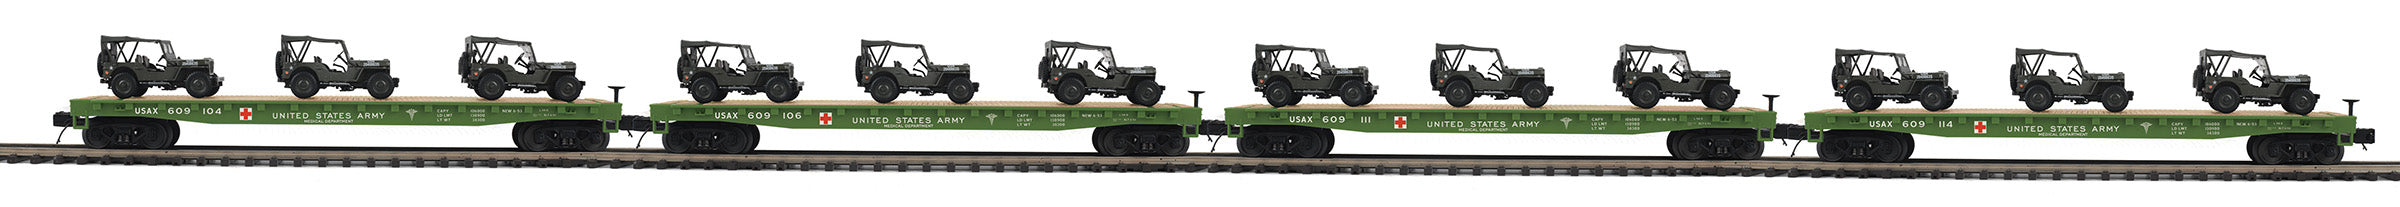 MTH 20-92367 - Flat Car "U.S. Army" w/ (3) Willy’s Transport Vehicles (4-Car) - Set #1 (MASH)